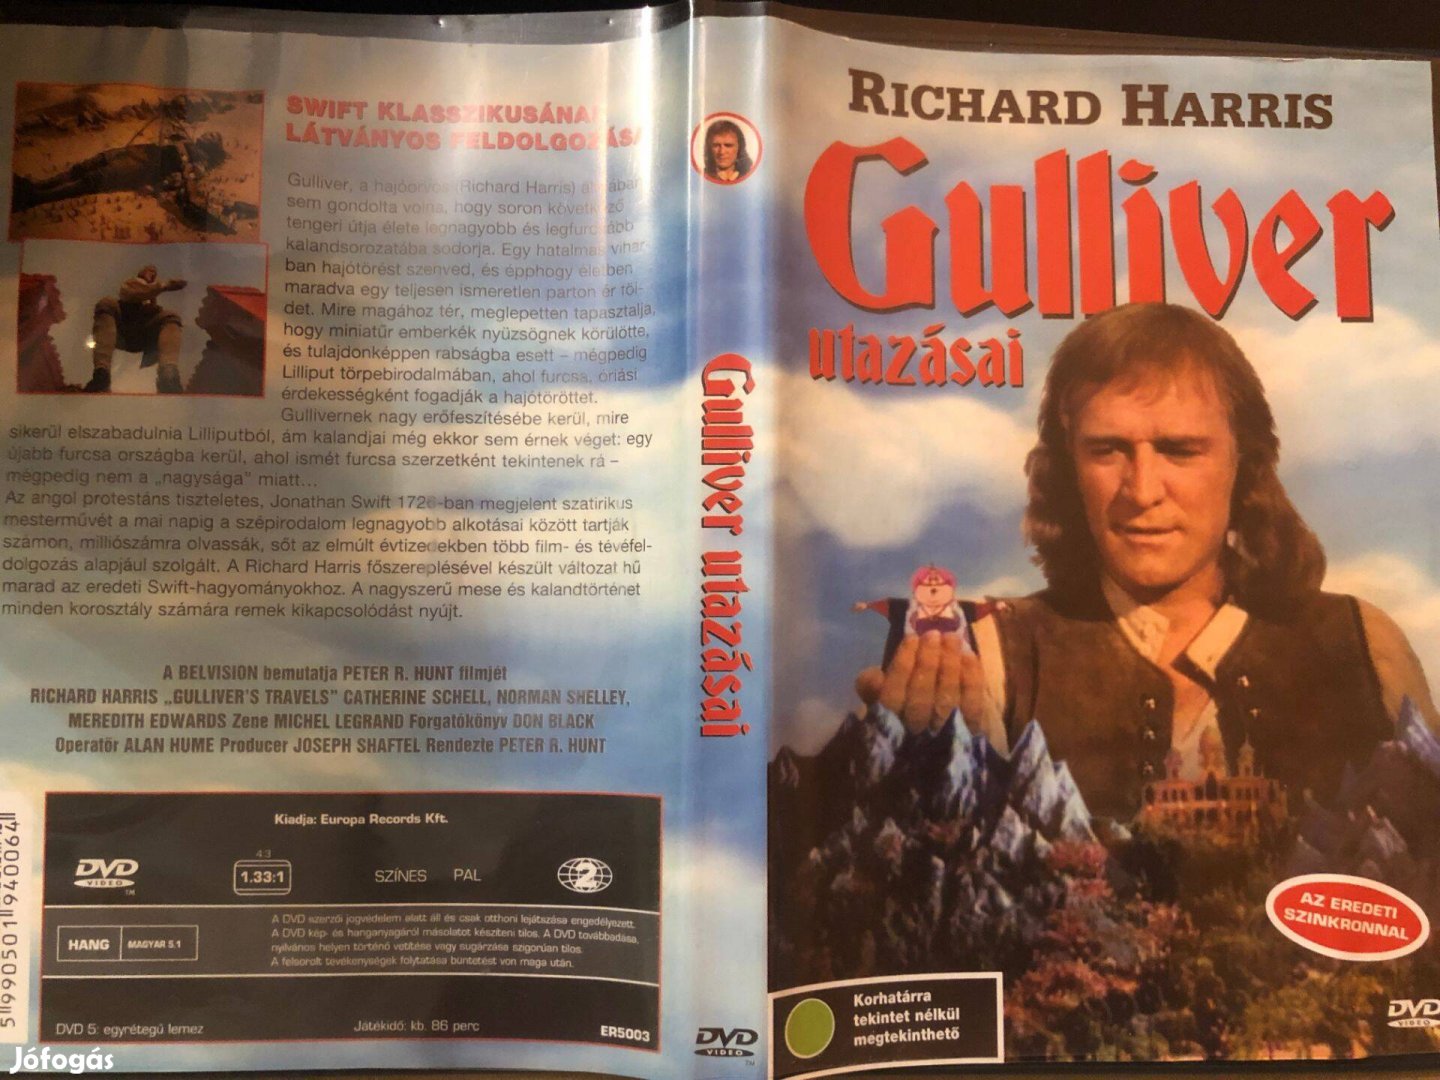 Gulliver csodálatos utazásai DVD (karcmentes, Ted Danson)